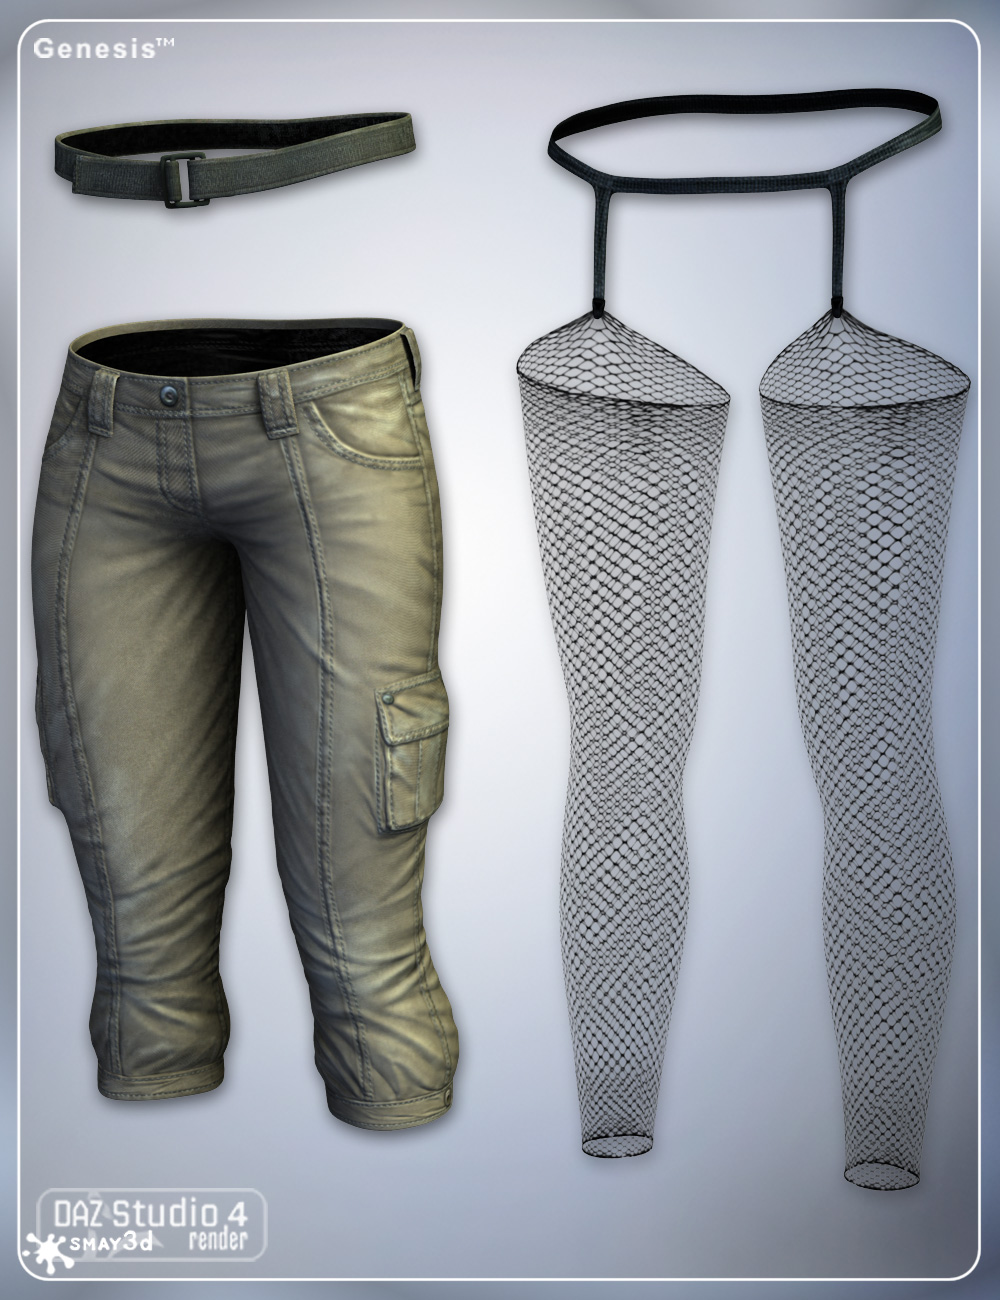 Stalker Girl Pants for Genesis by: smay, 3D Models by Daz 3D